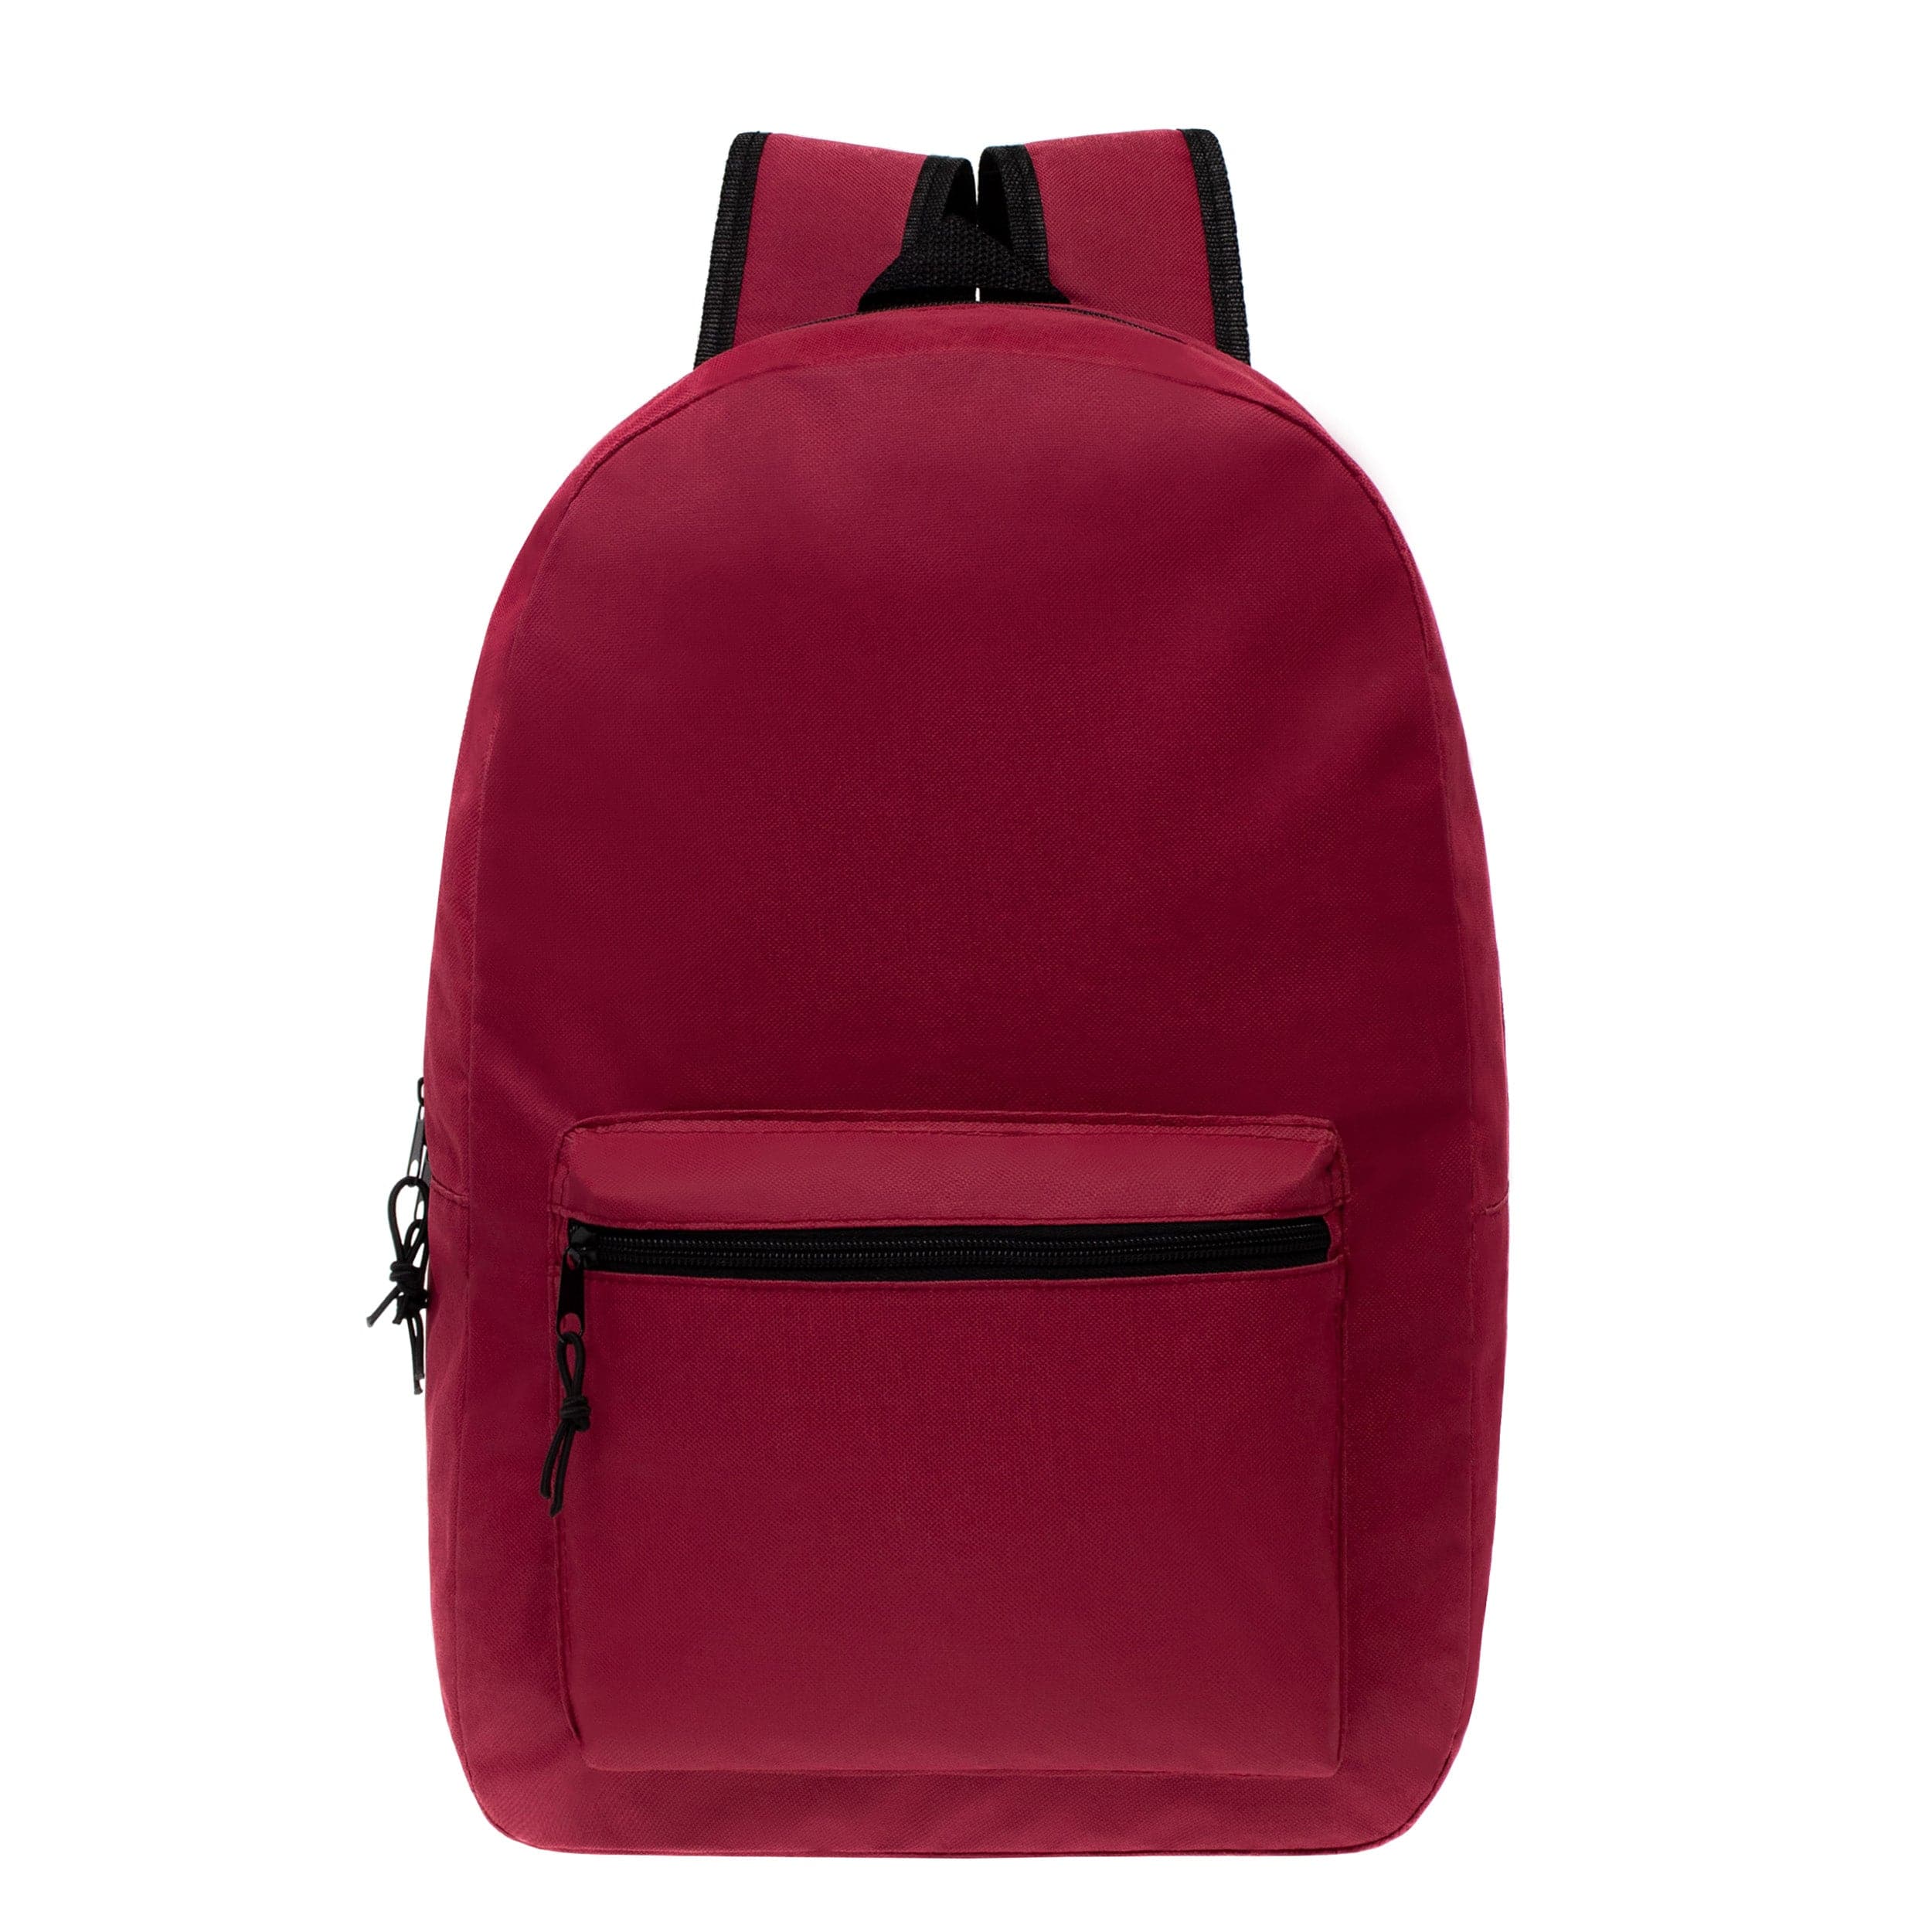 15" Kids Basic Wholesale Backpack in 8 Colors - Bulk Case of 24